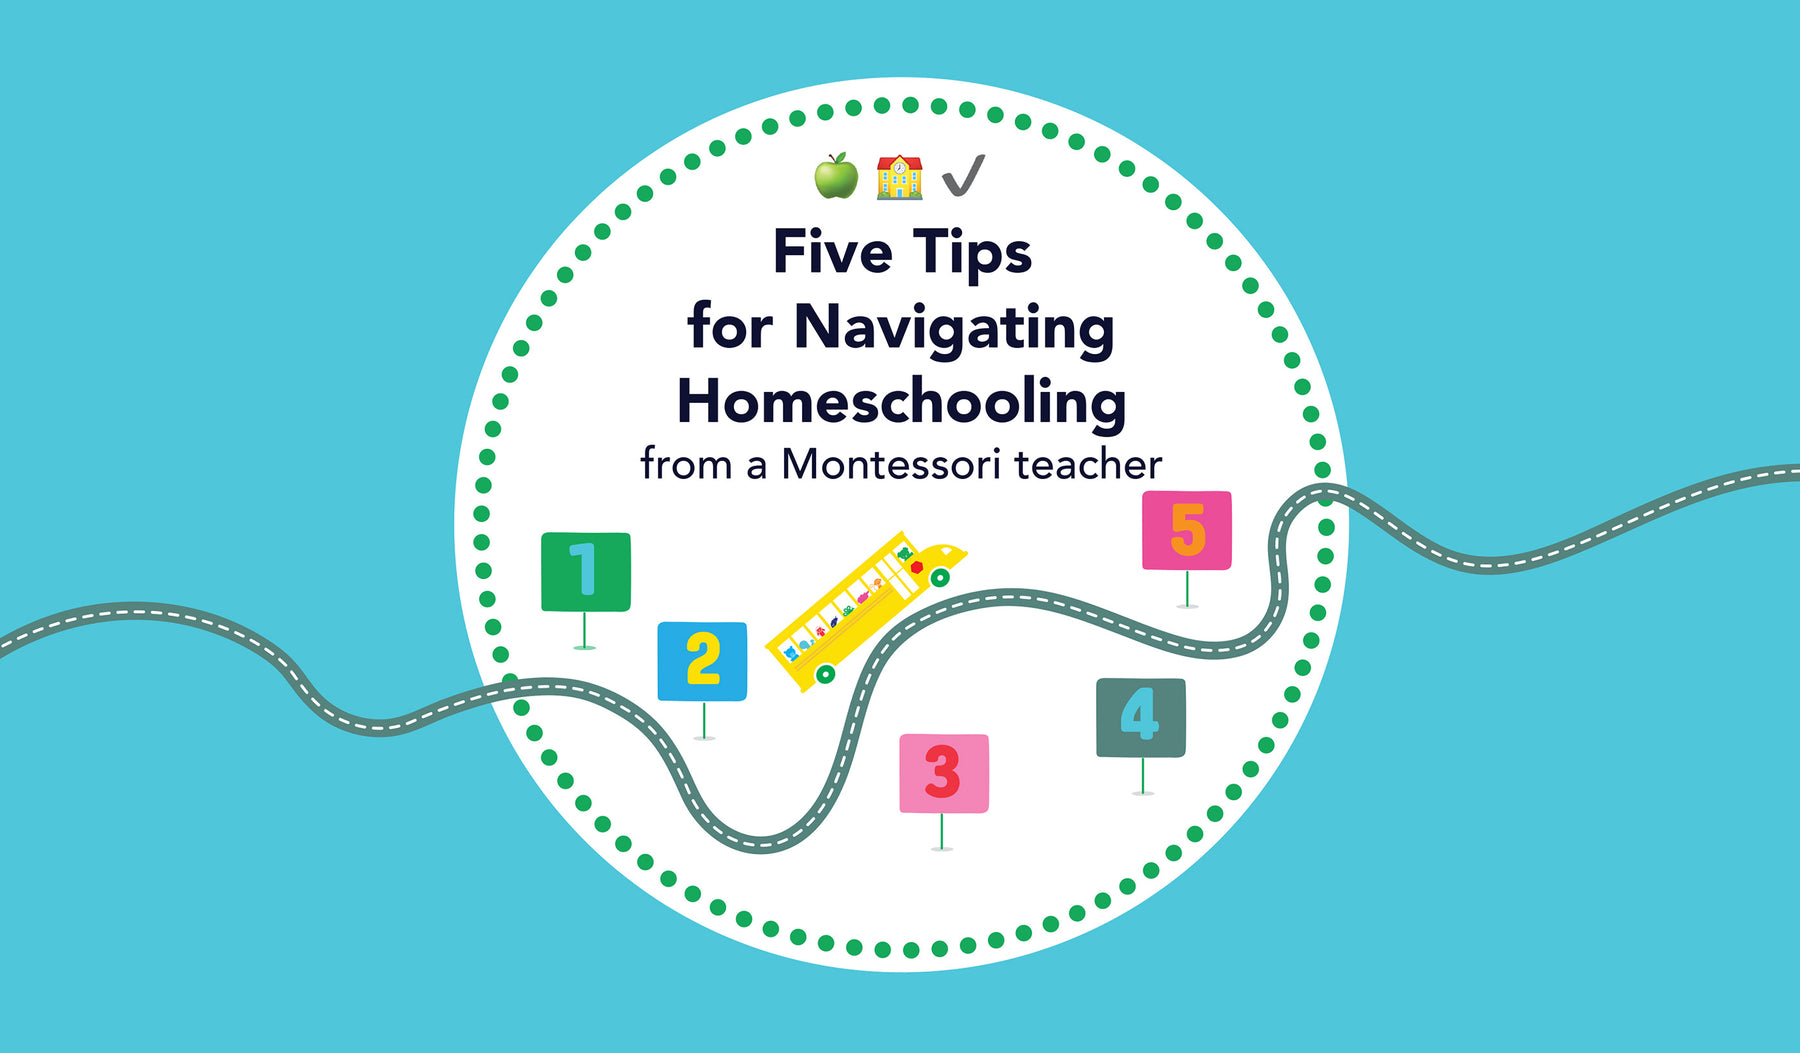 Five Tips from a Montessori Teacher for Navigating Homeschooling